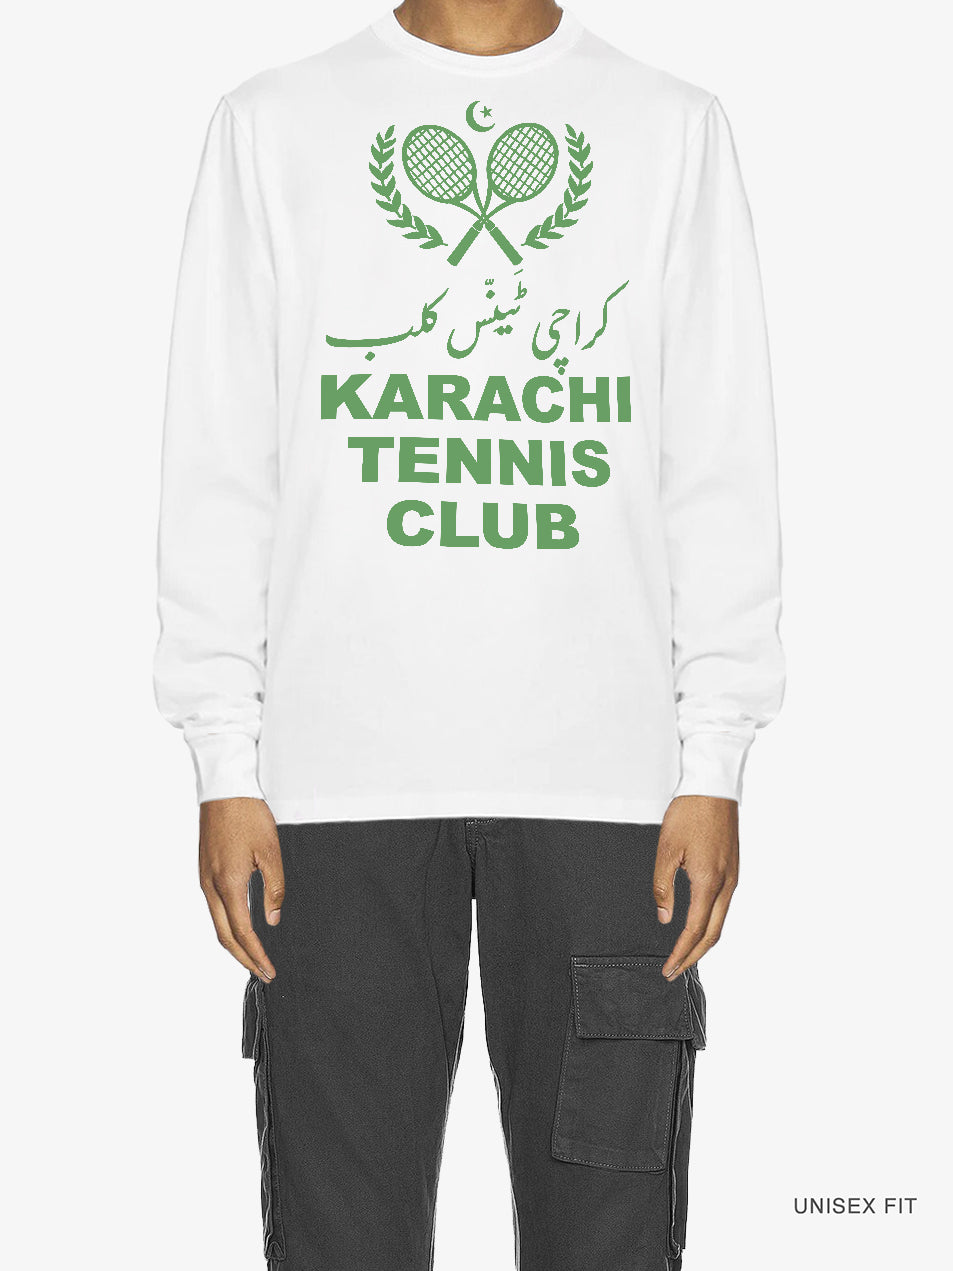 Long-Sleeve | "Karachi Tennis Club" Crewneck Tee